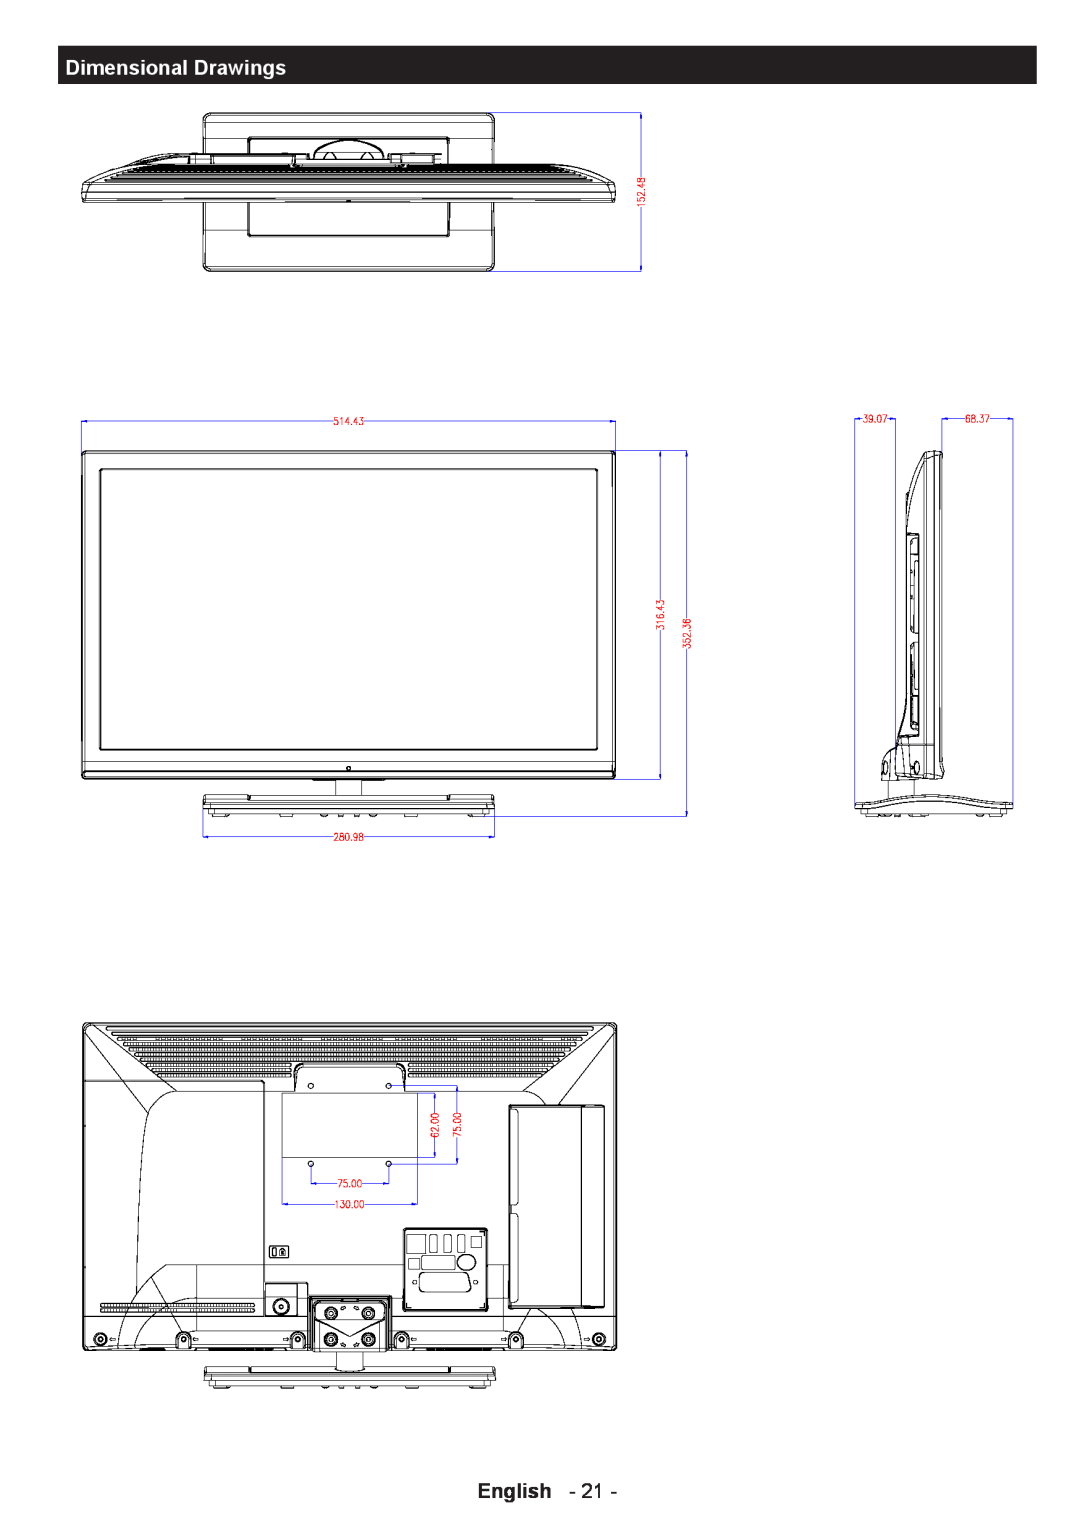 Sharp LC-22LE250K operation manual Dimensional Drawings, English 